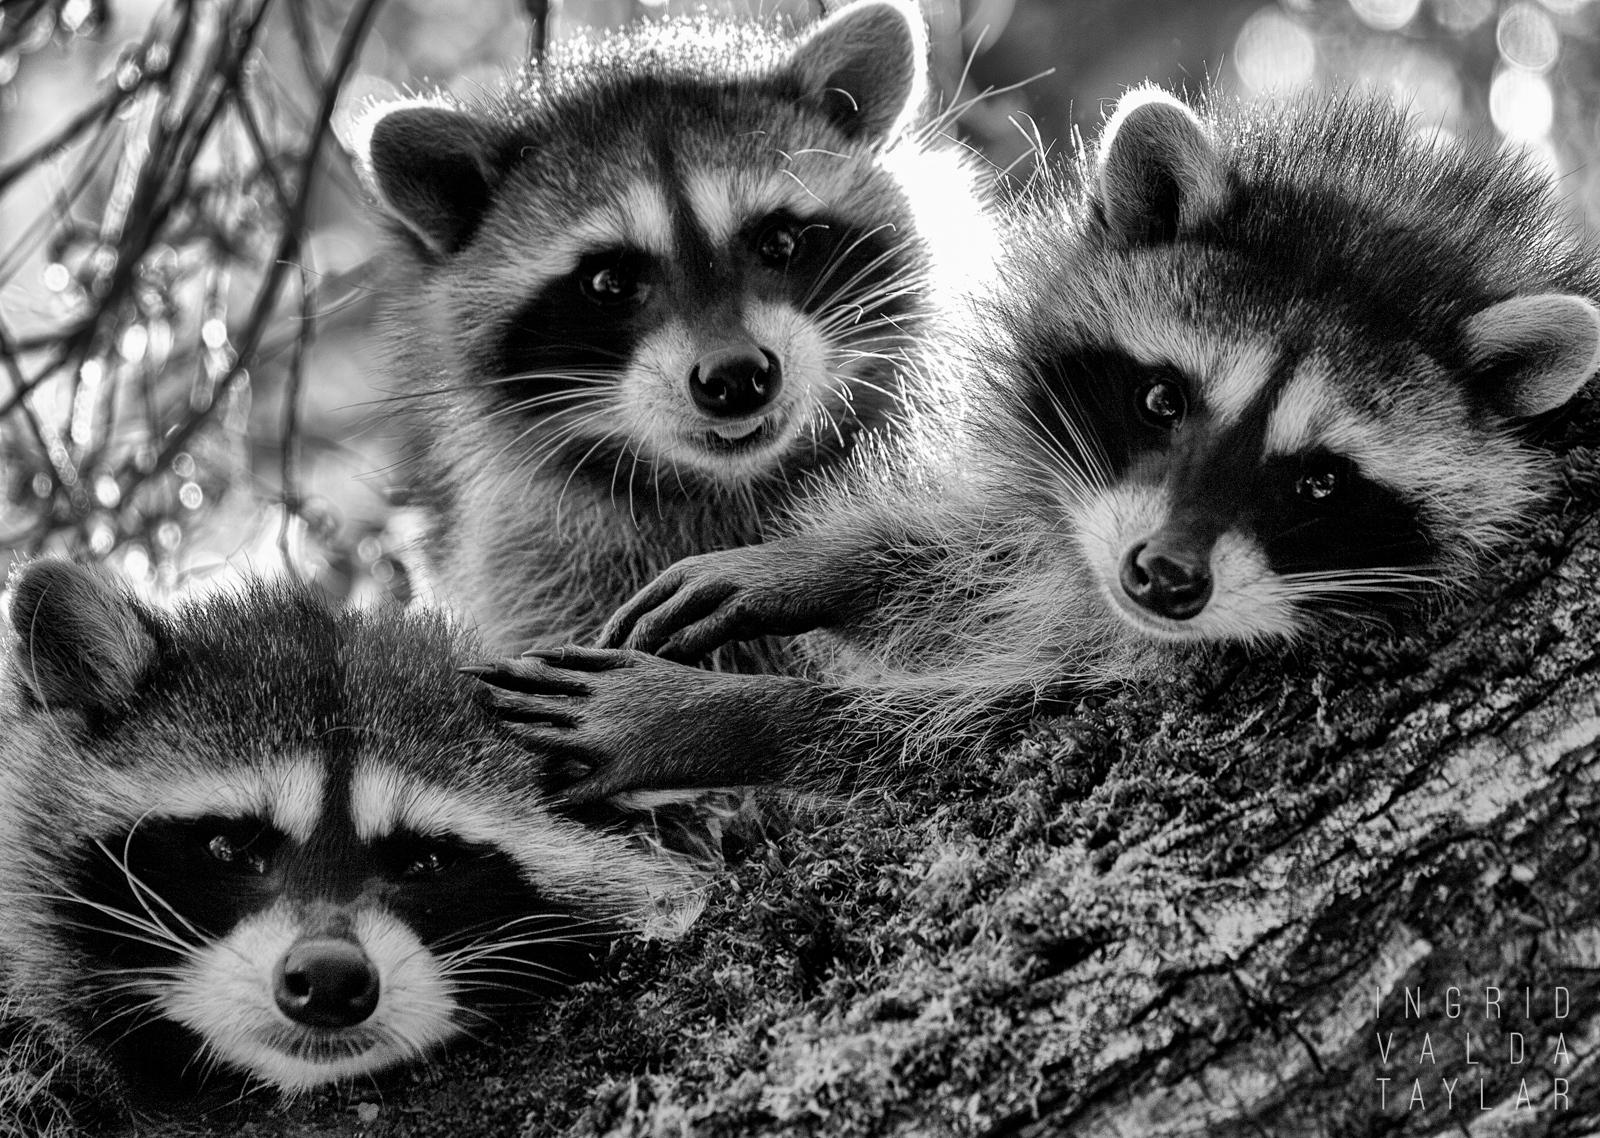 Three Raccoon Kits in Tree